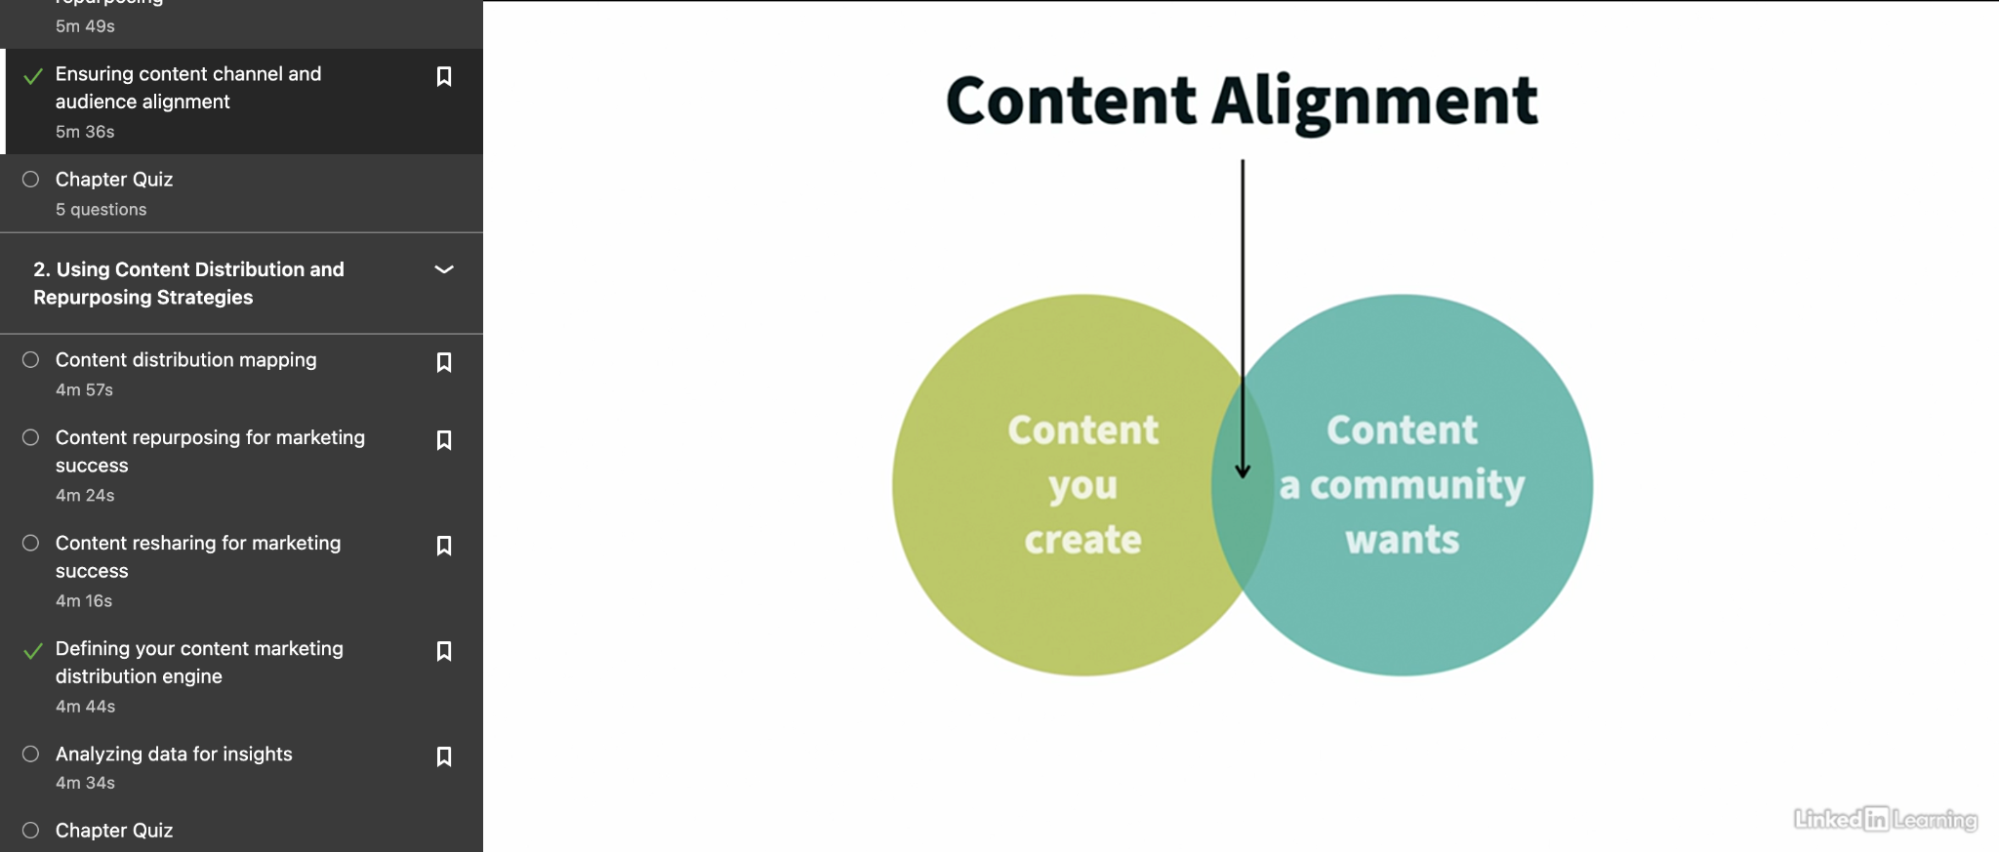 content alignment venn diagram